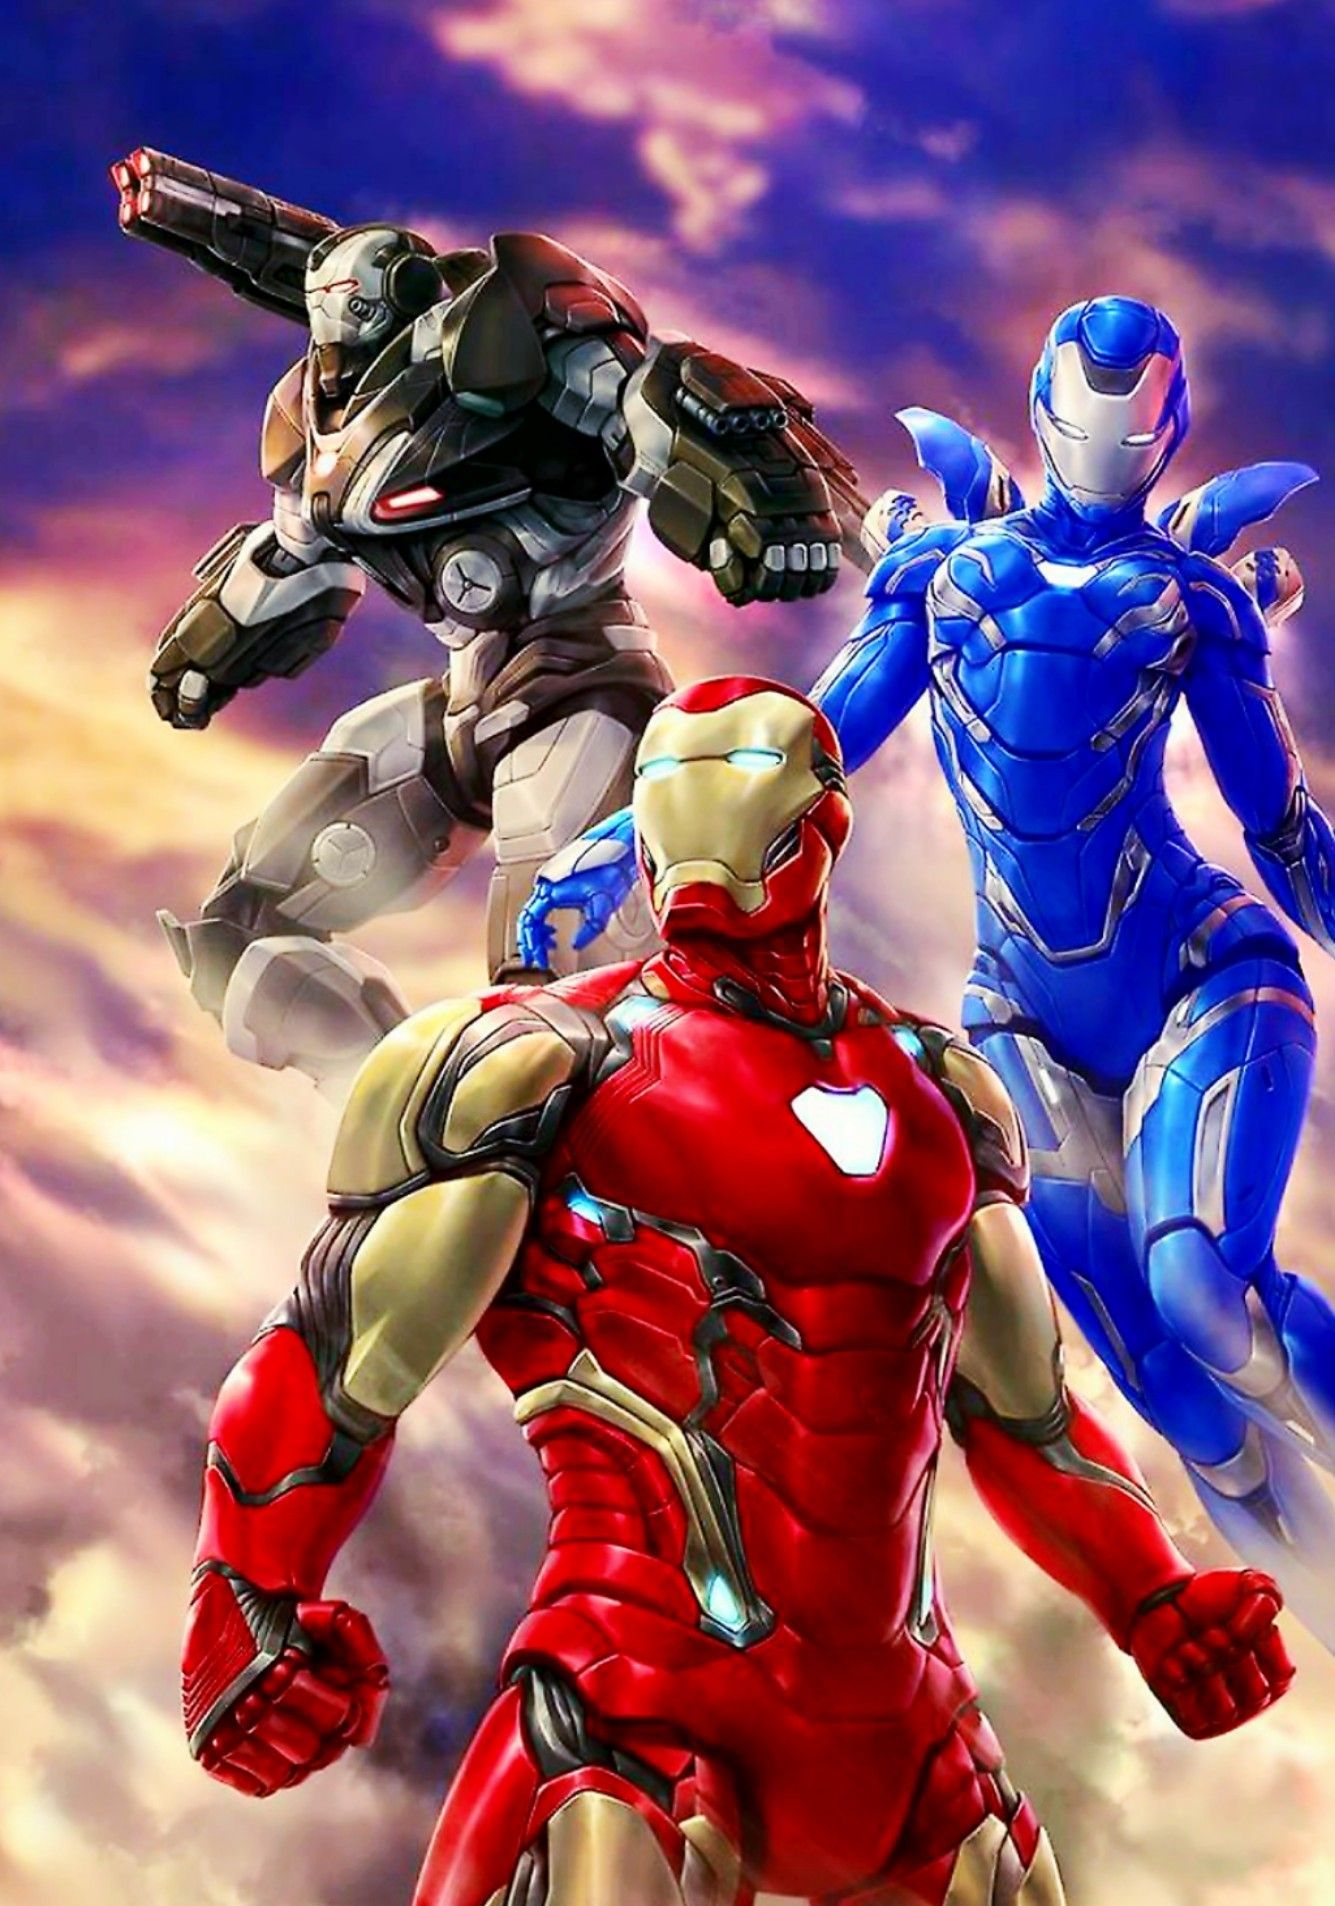 Avengers Endgame. Ironman Mark 85 x Rescue x War Machine #marvel #ironman. Marvel superheroes art, Marvel superheroes, Marvel art